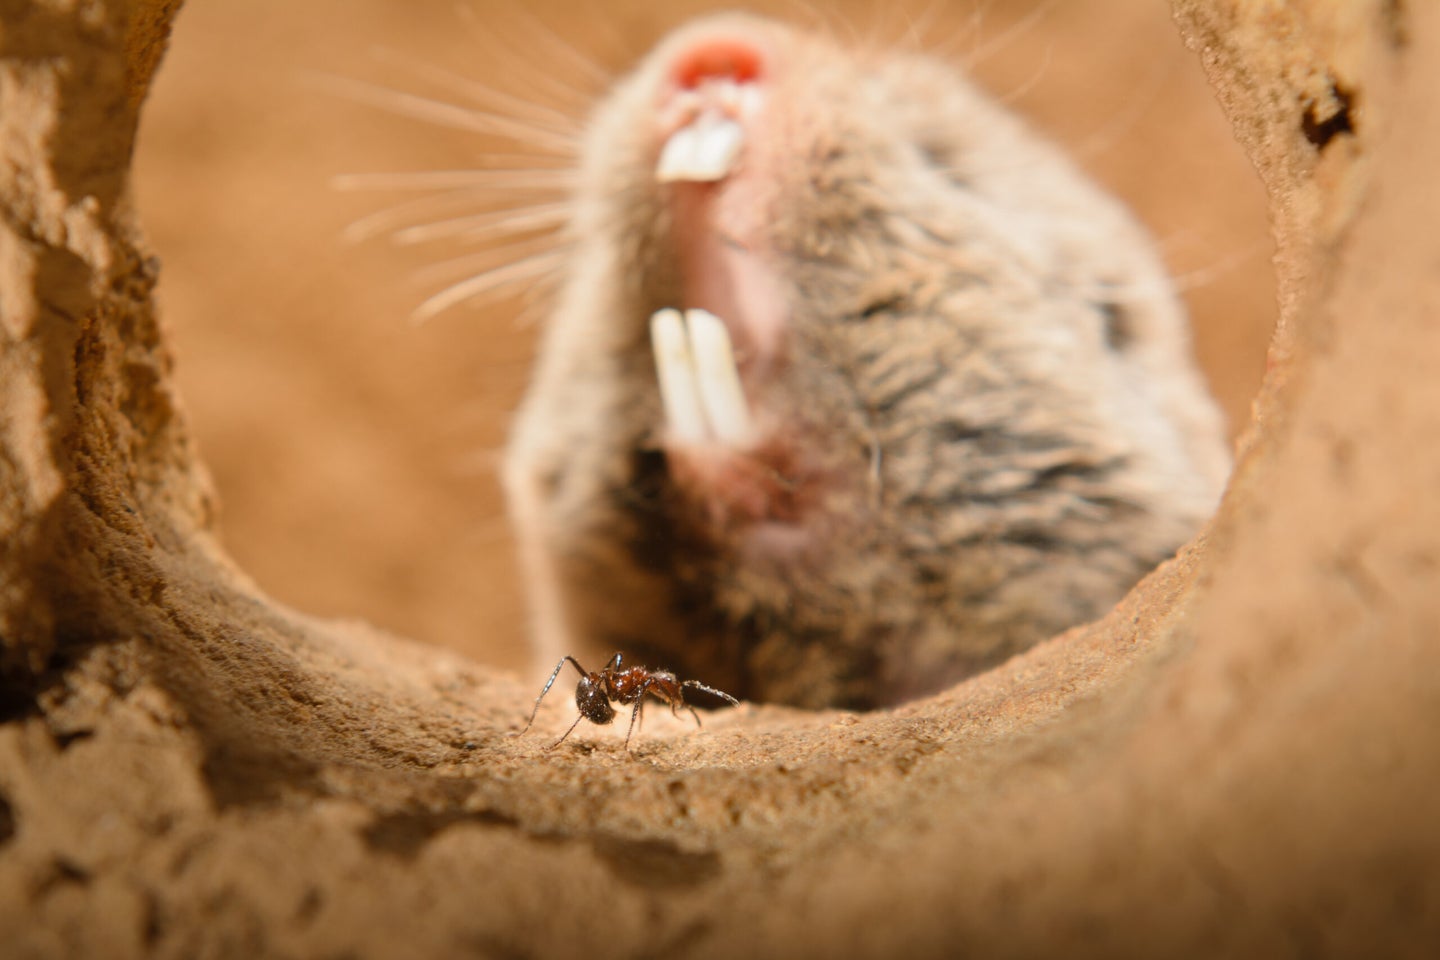 highveld mole rat droptail ant